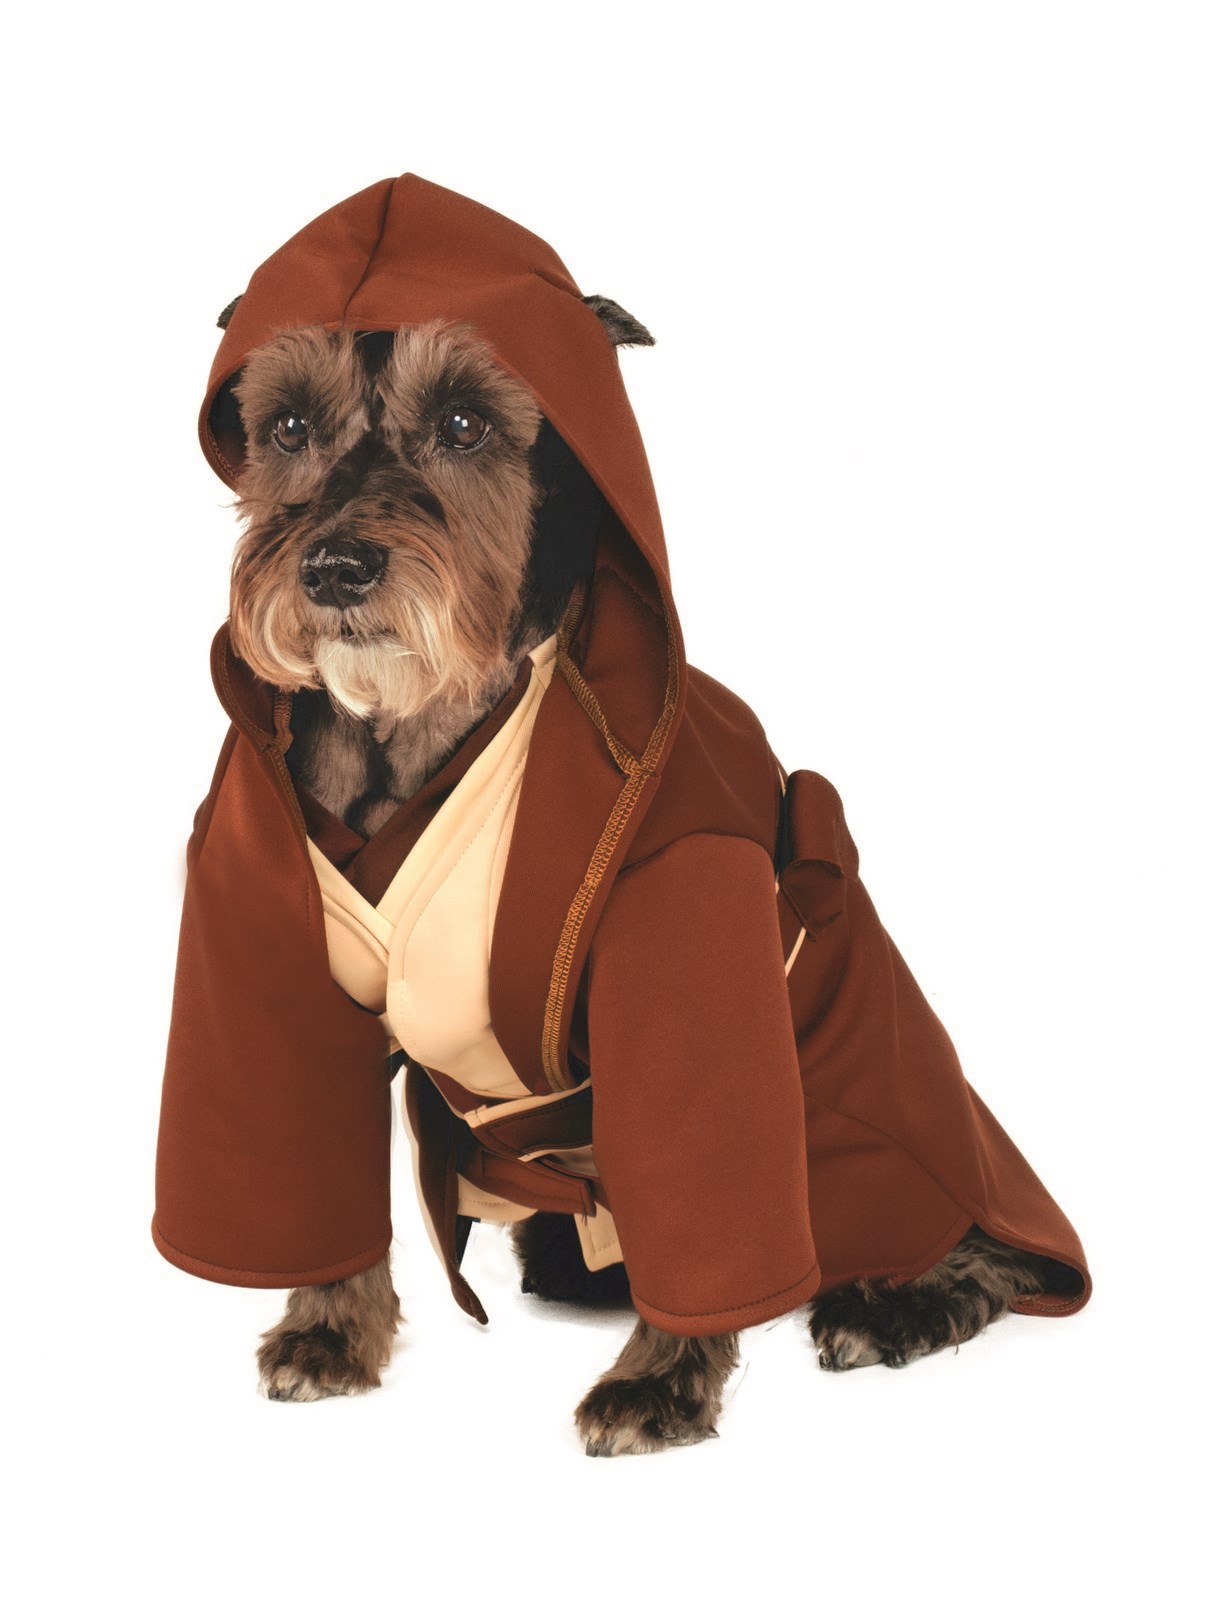 Star Wars Jedi Robe Costume For Pets